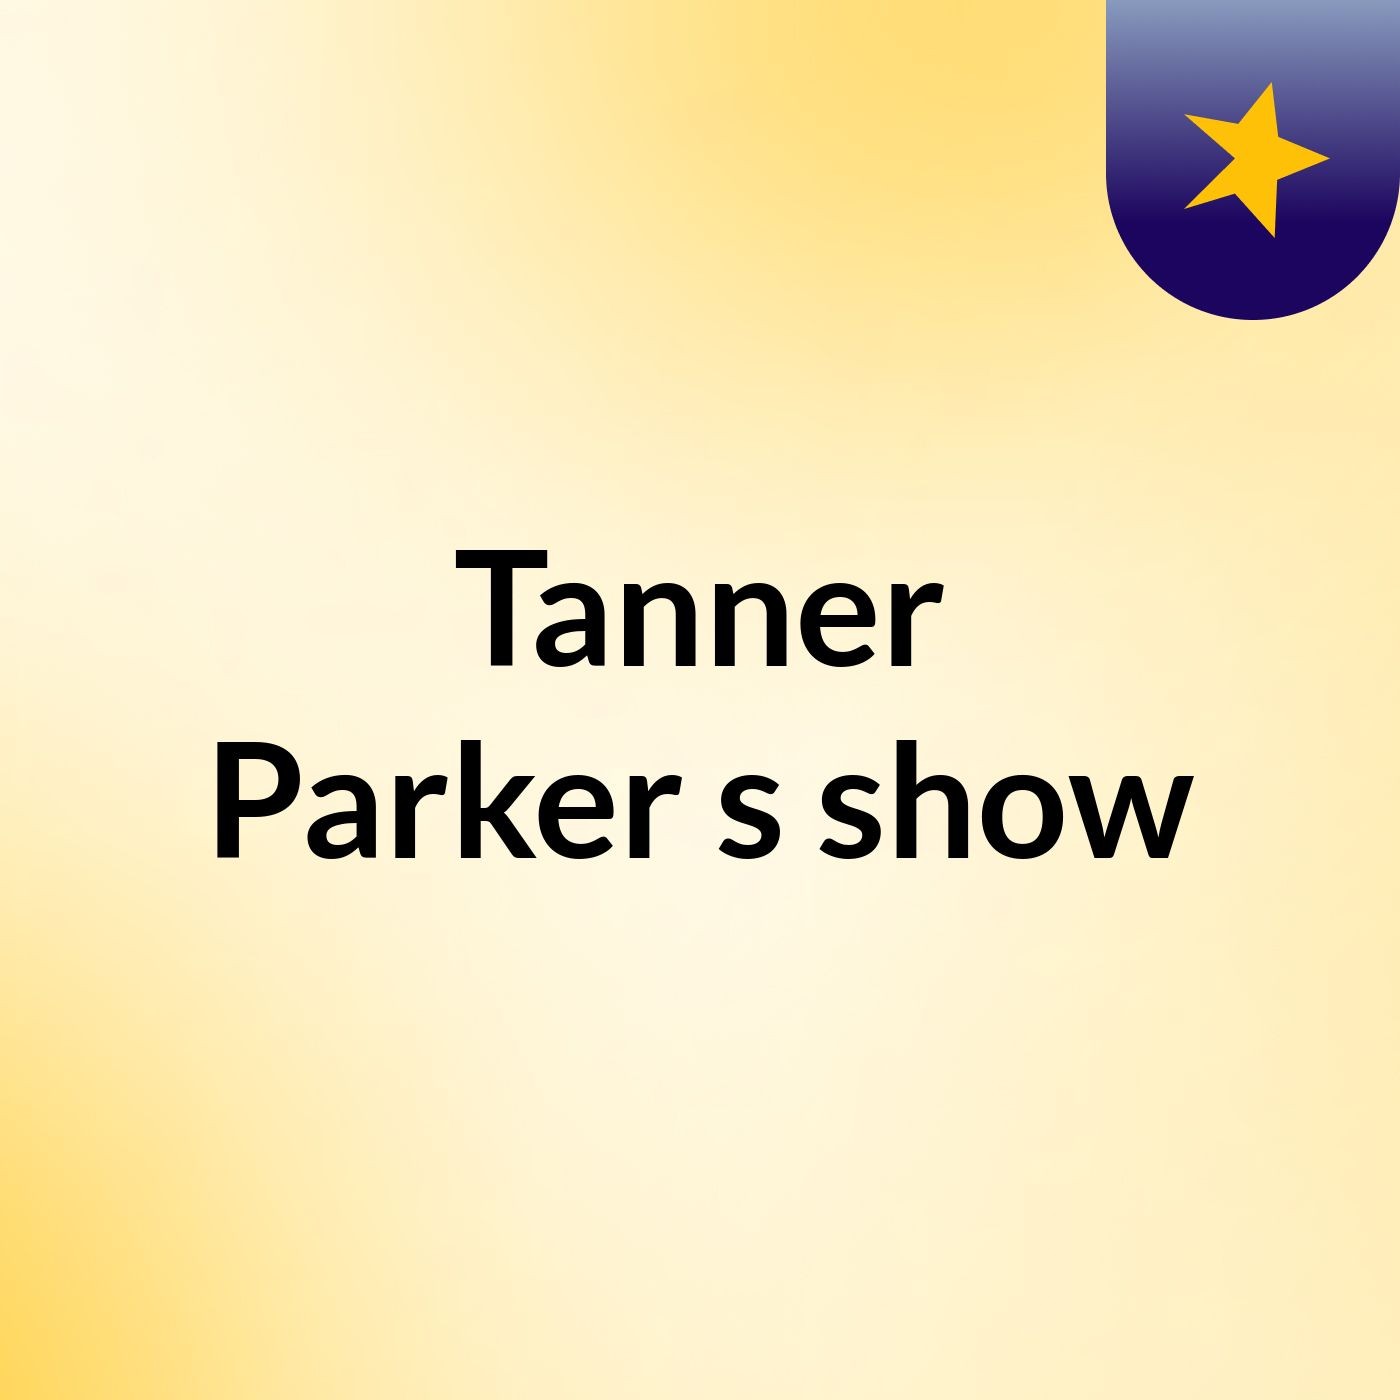 Tanner Parker's show